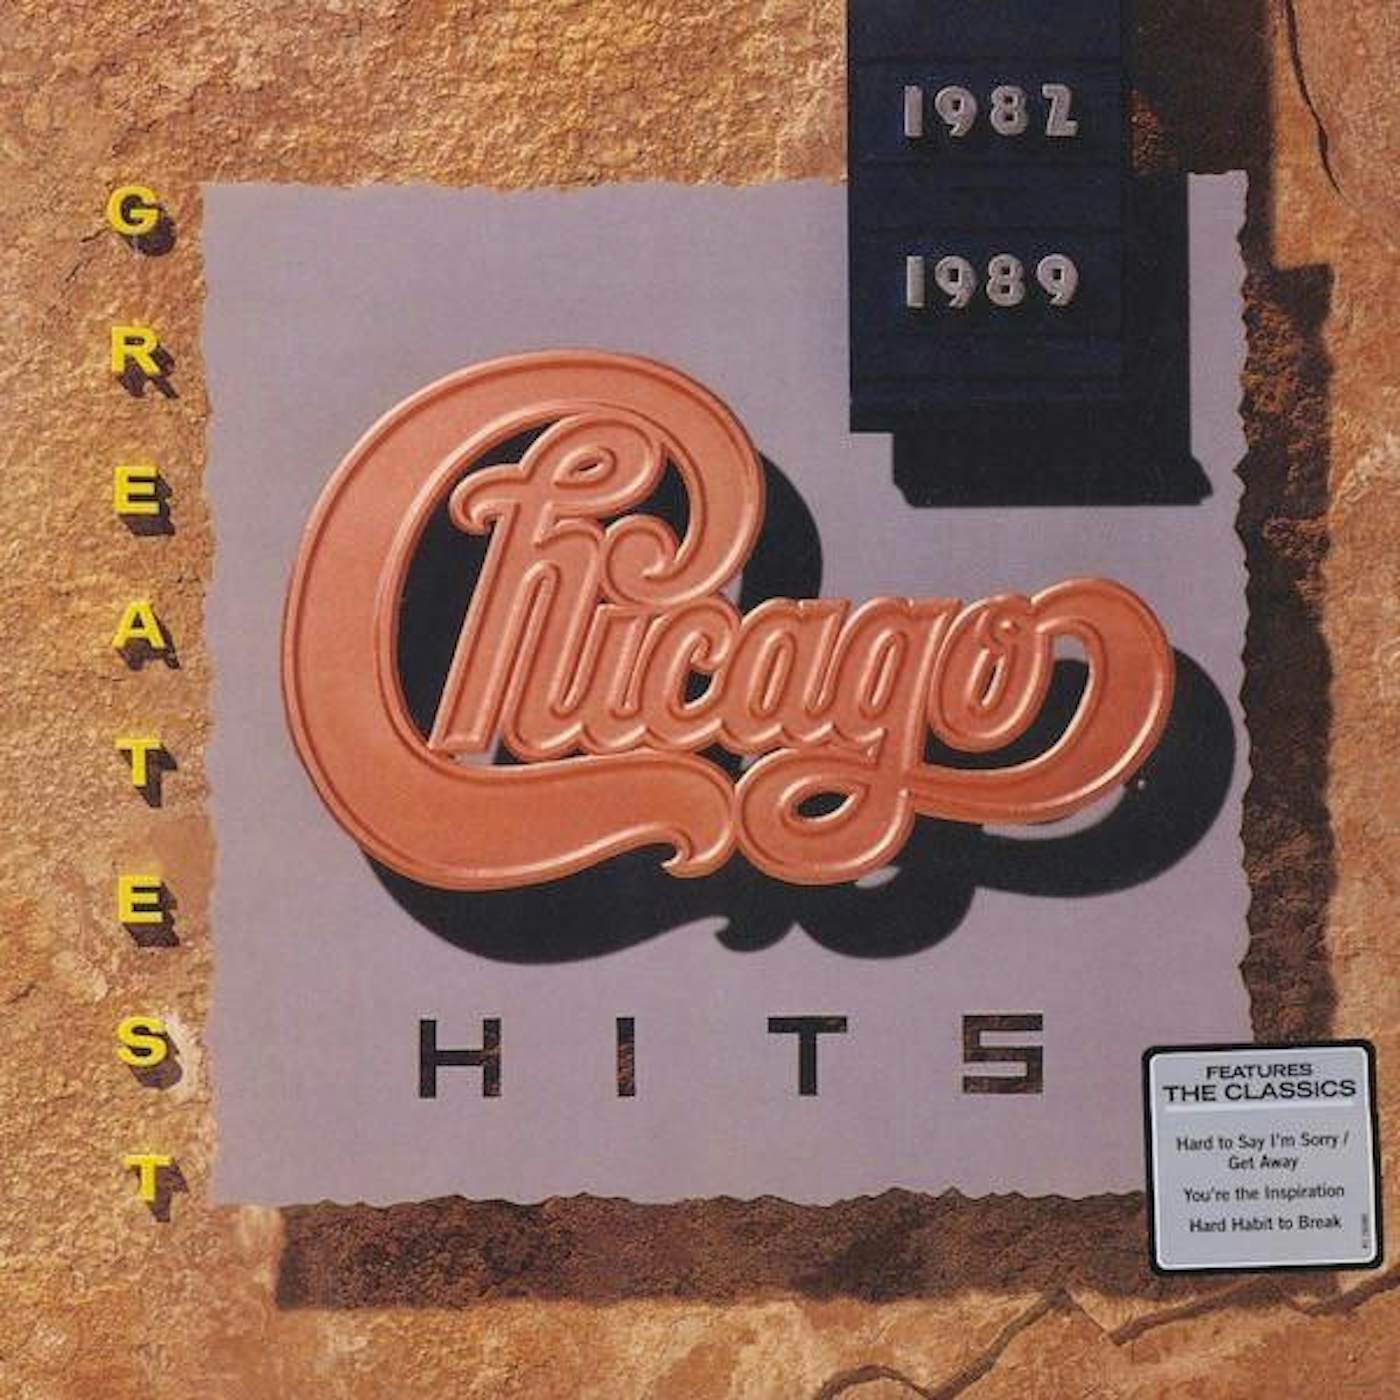 Chicago GREATEST HITS 1982-1989 Vinyl Record